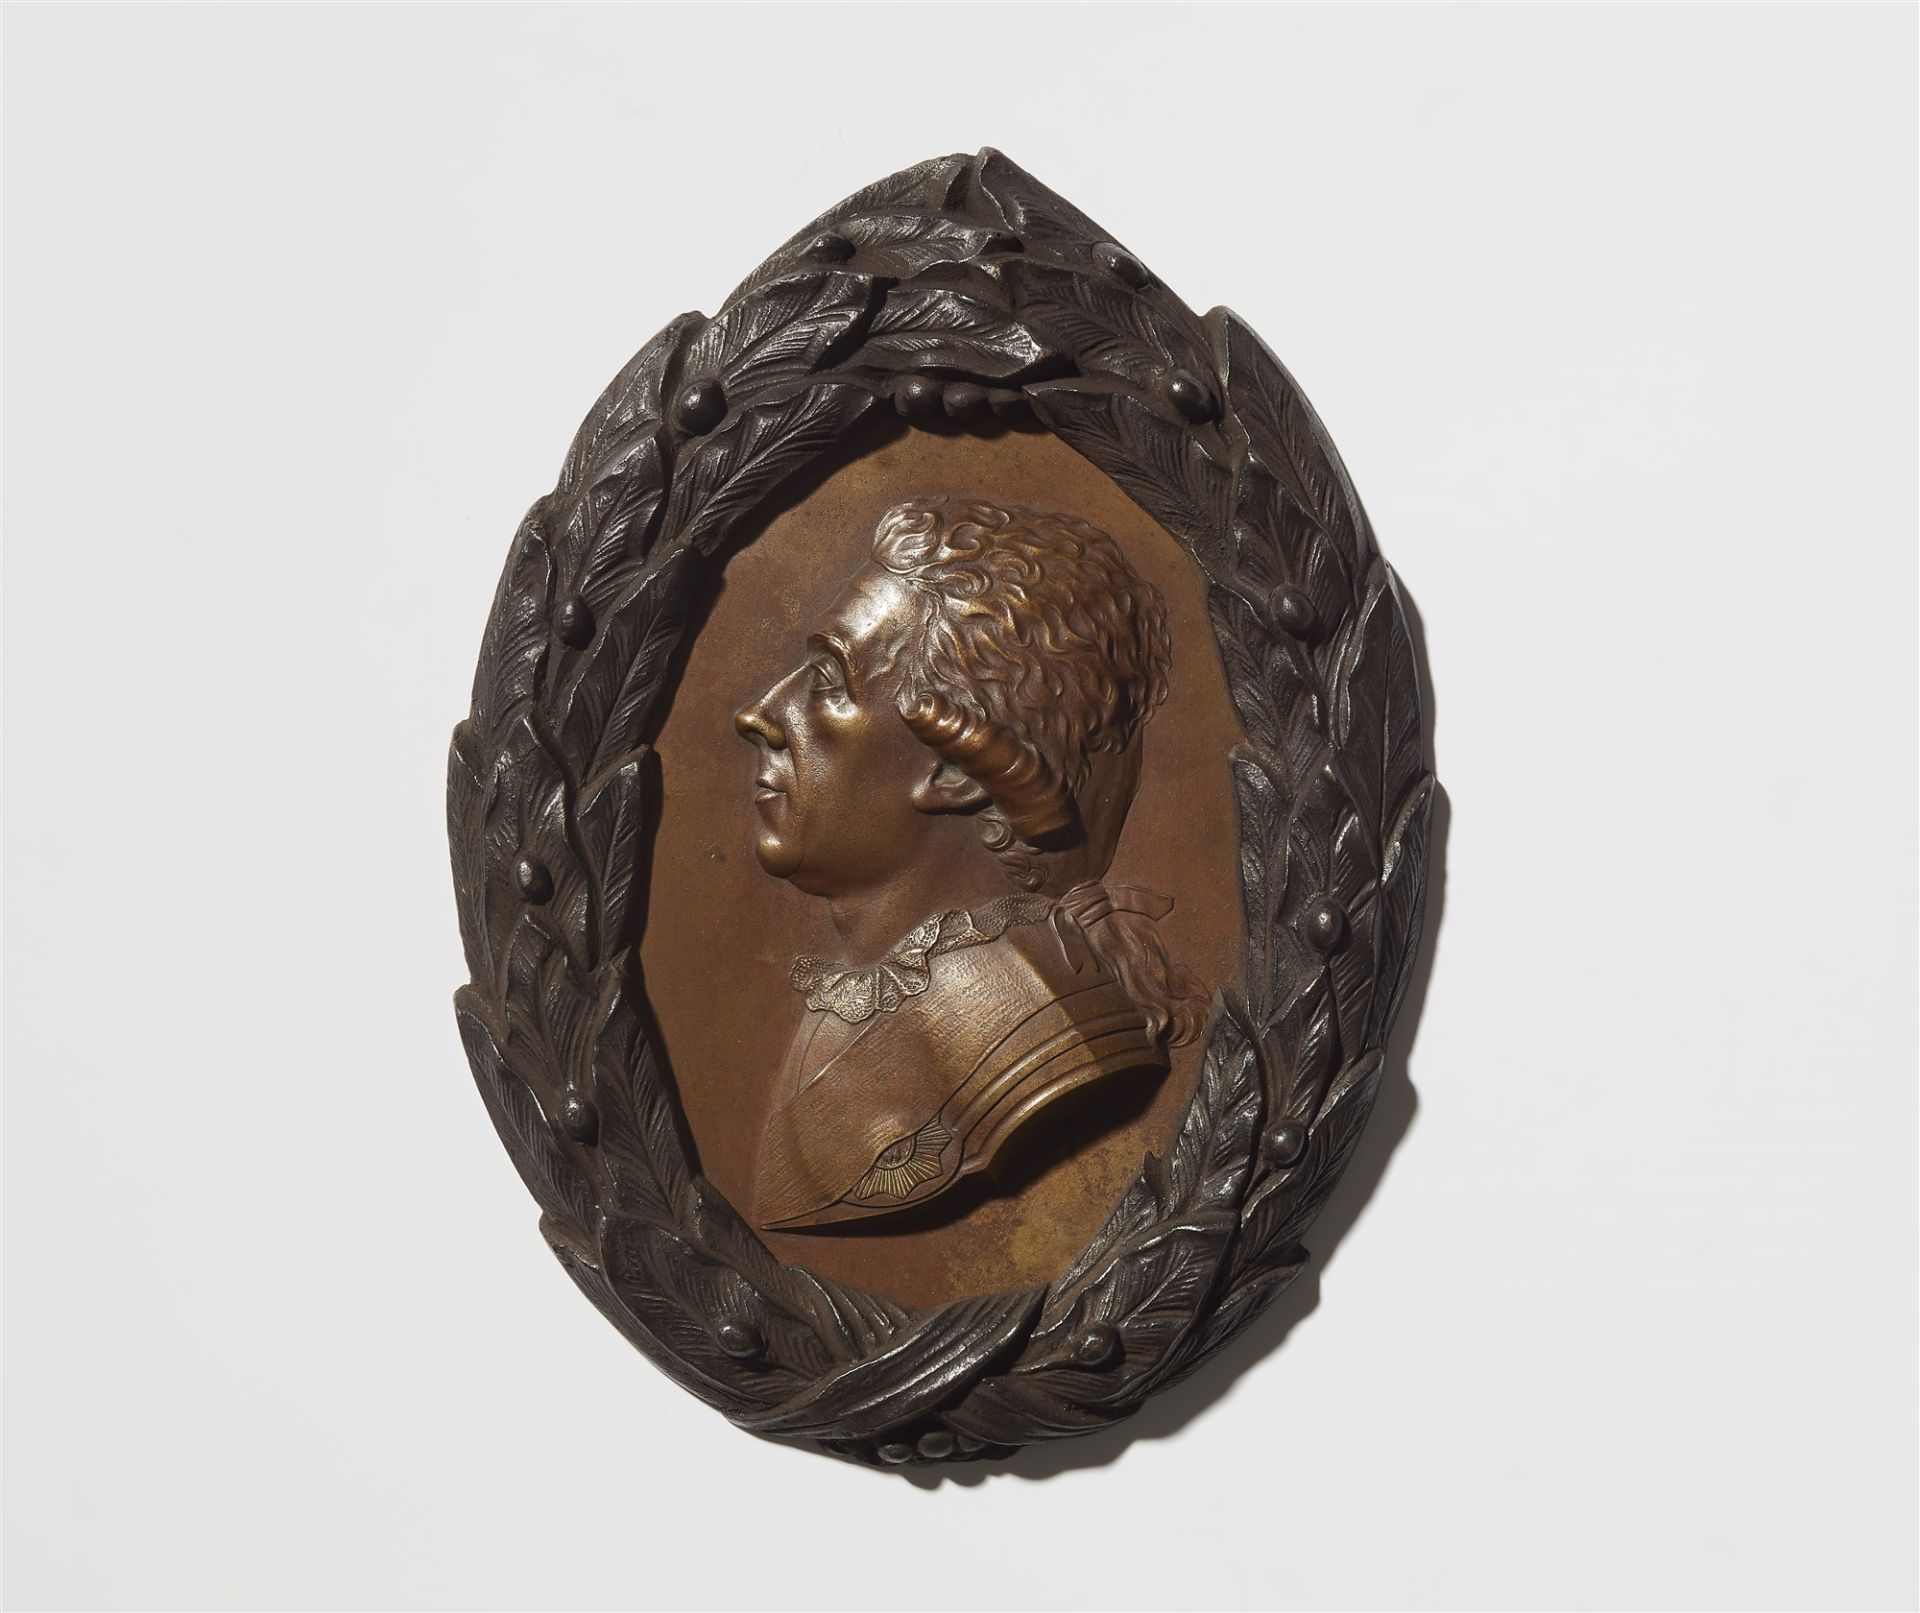 A bronze plaque with a portrait of Prince Heinrich